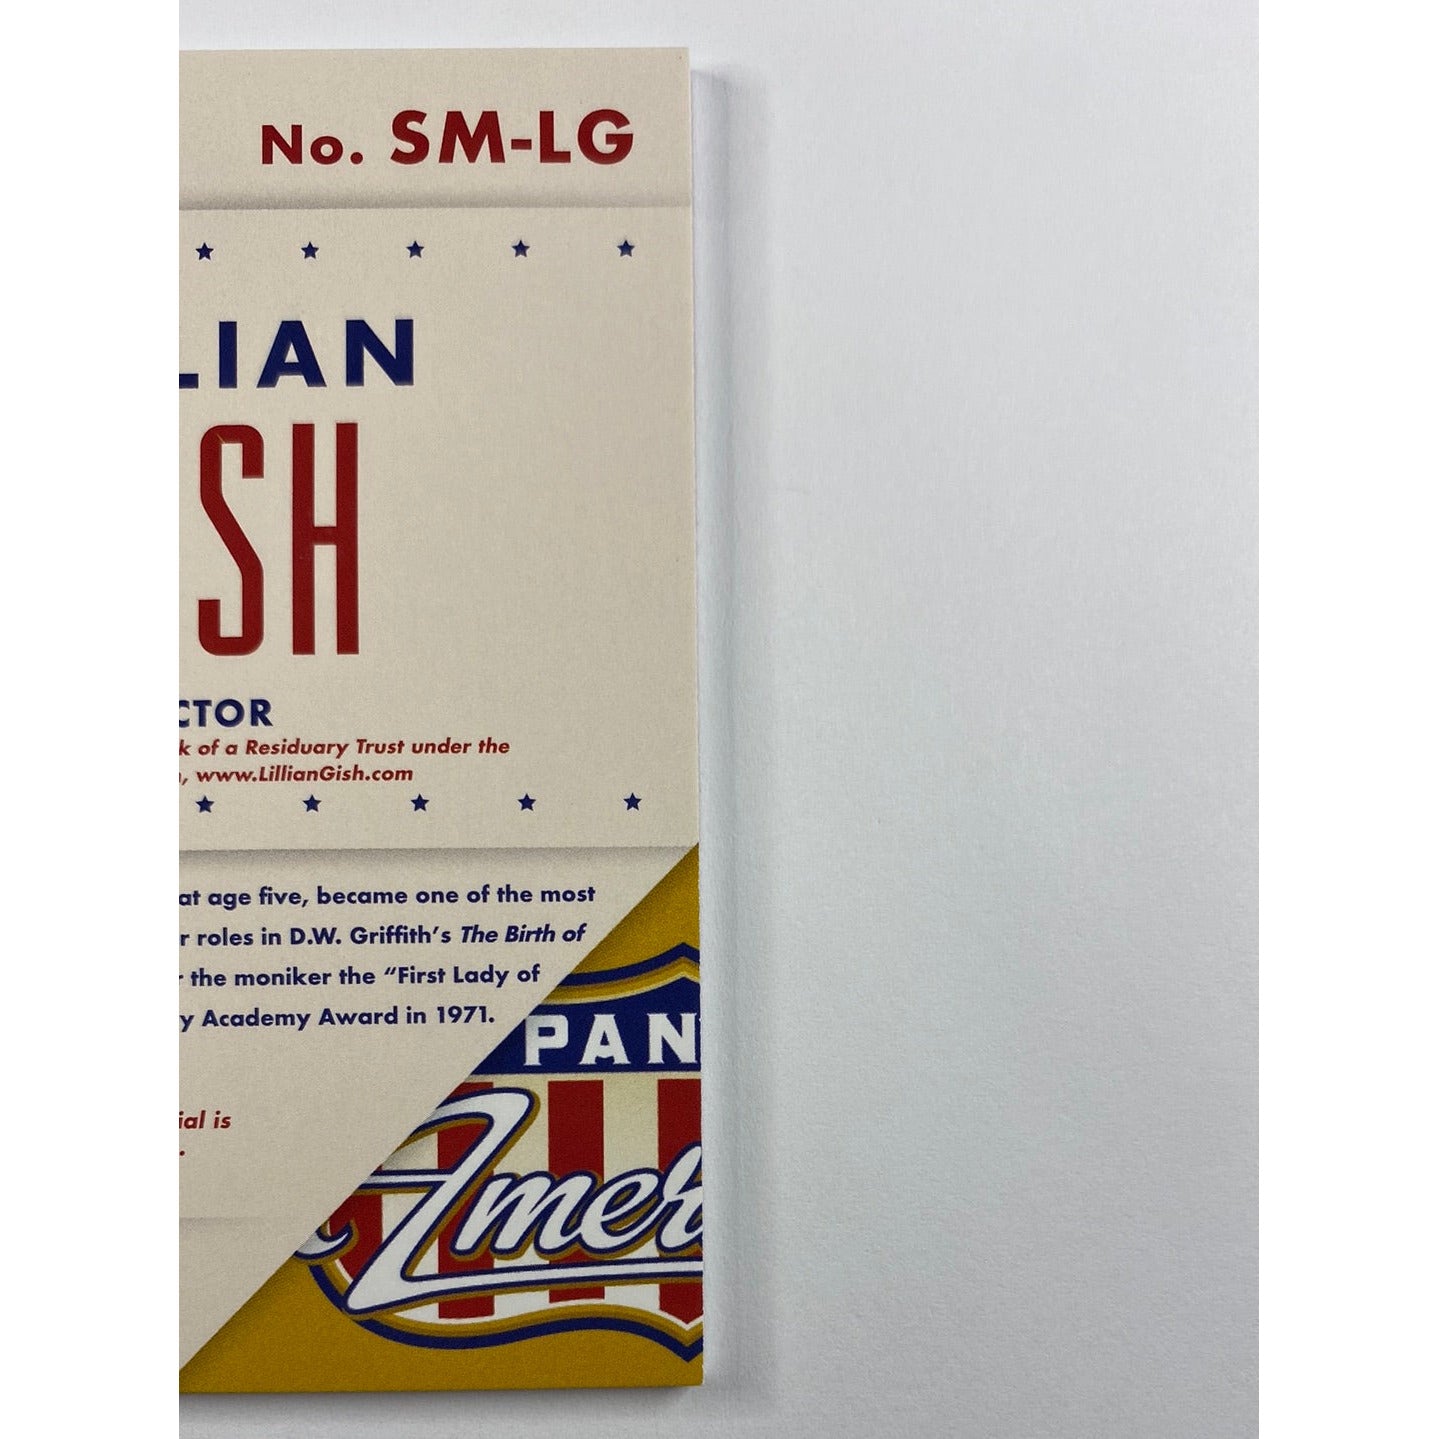 2015 Americana Lillian Gish Star Materials Patch